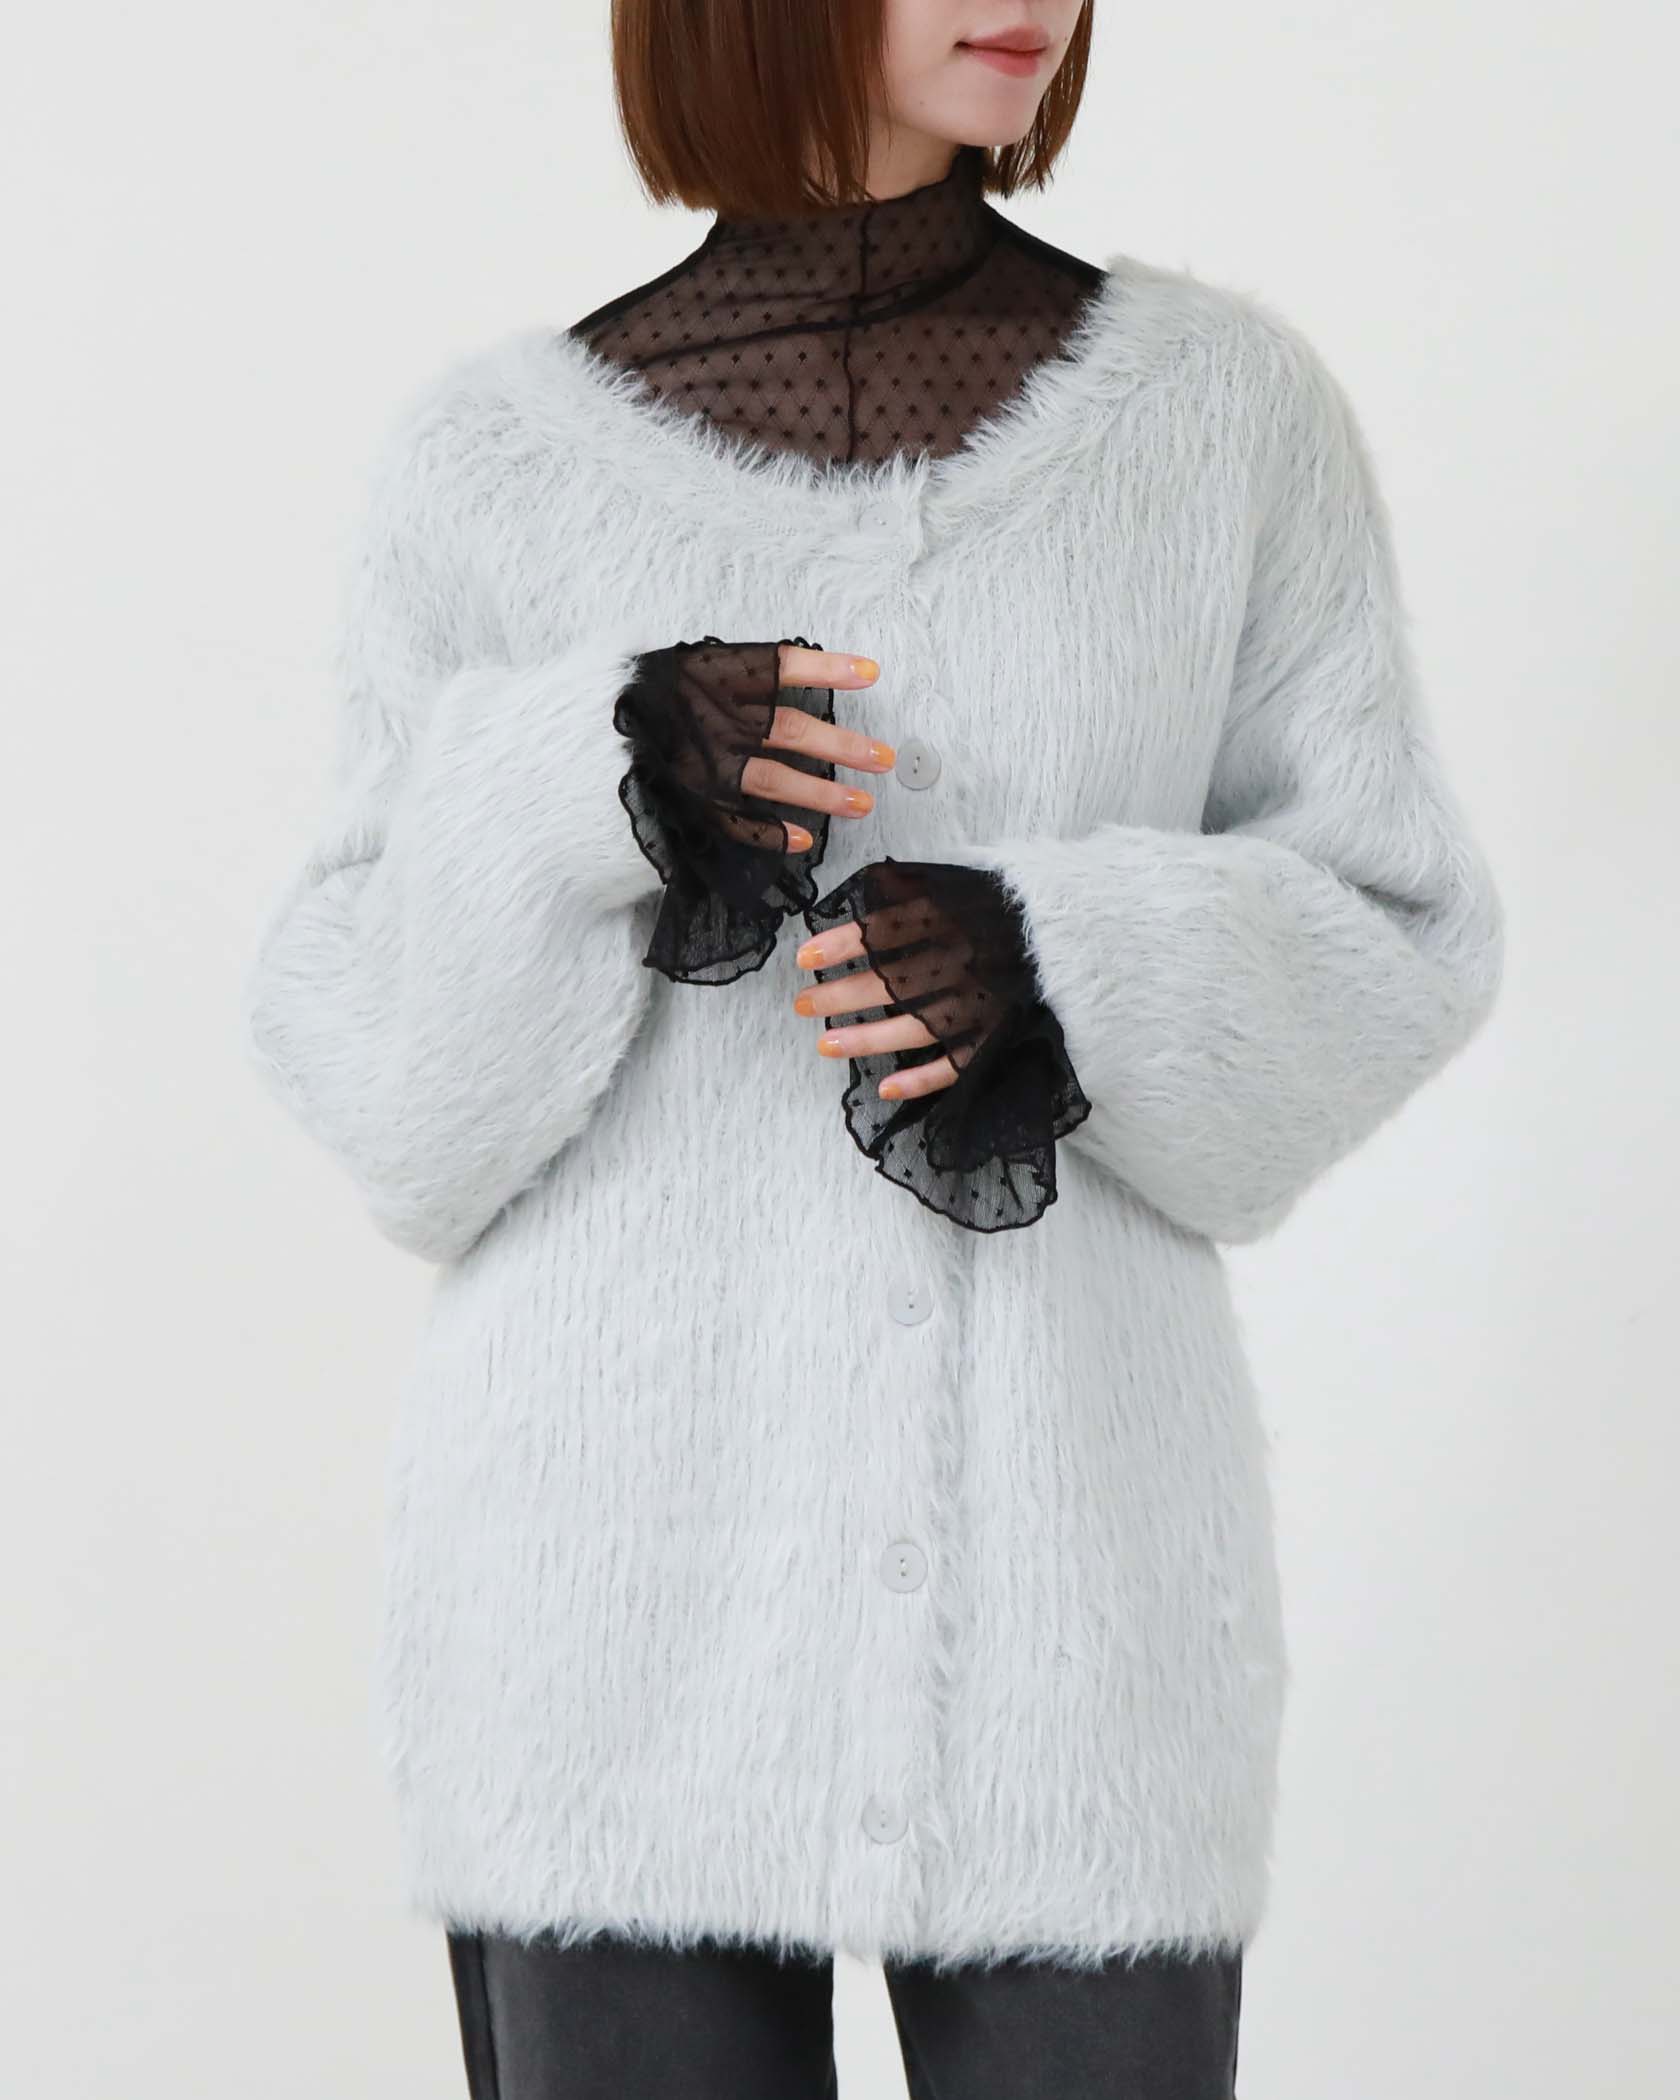 Season-less Chic Sweater Knit Long Cardigan Robe – Subtle Luxury